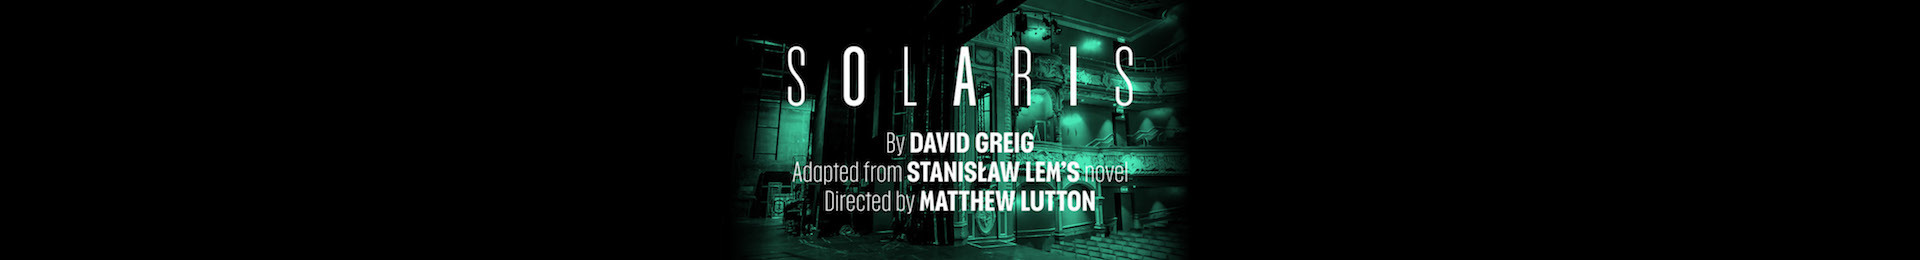 Solaris banner image